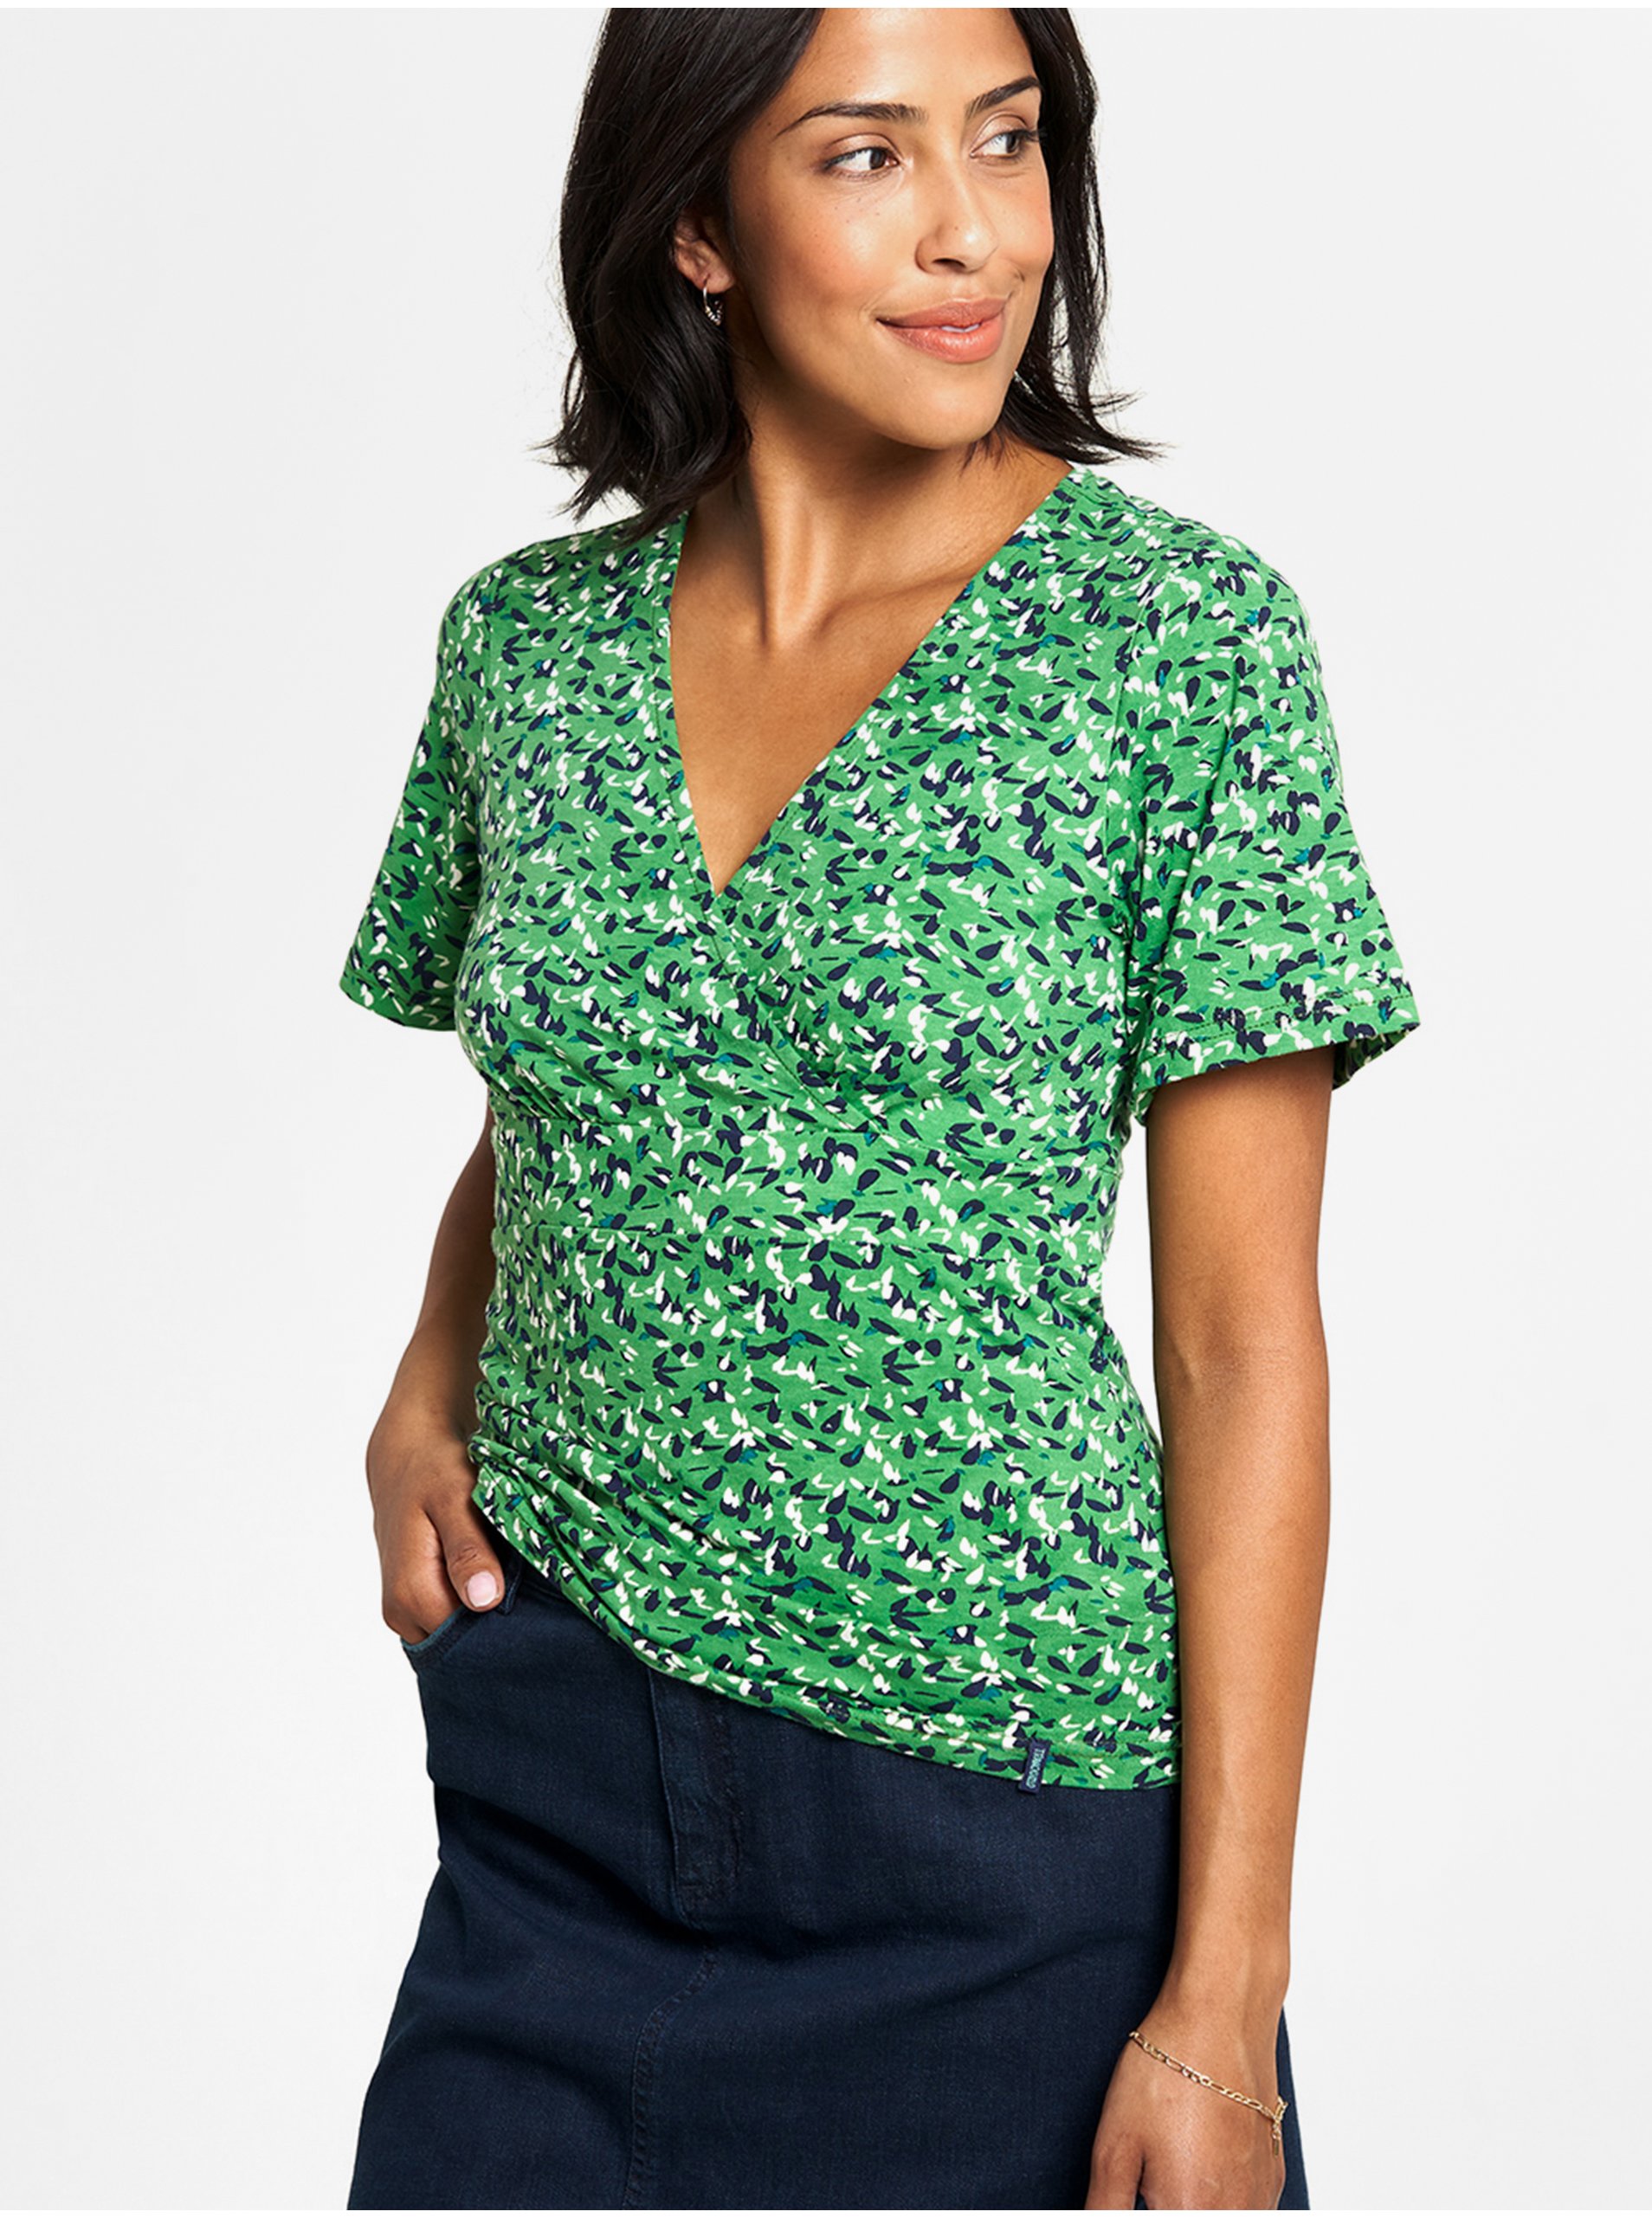 Green Patterned T-shirt Tranquillo - Women